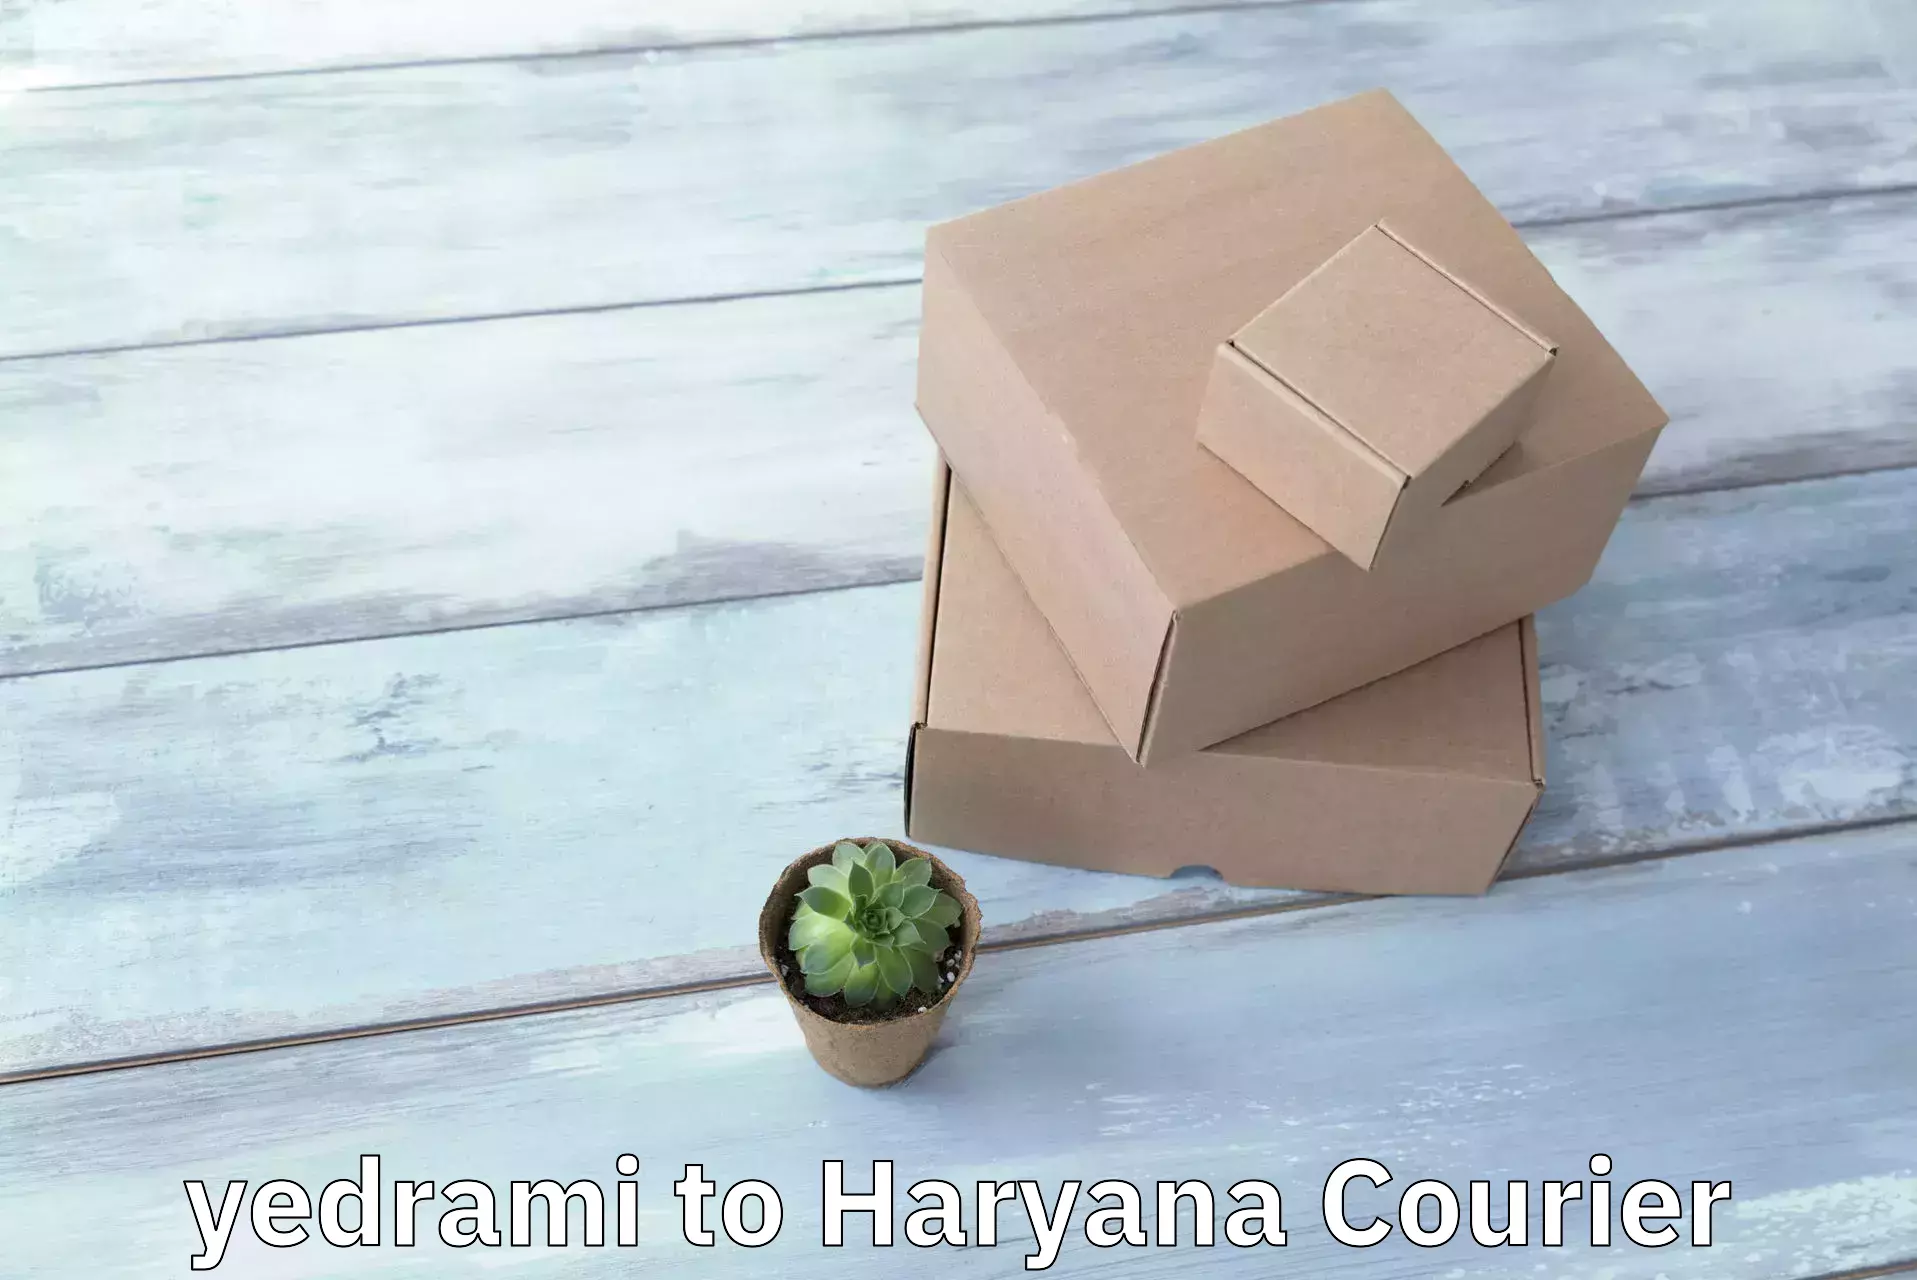 Premium courier solutions yedrami to Barwala